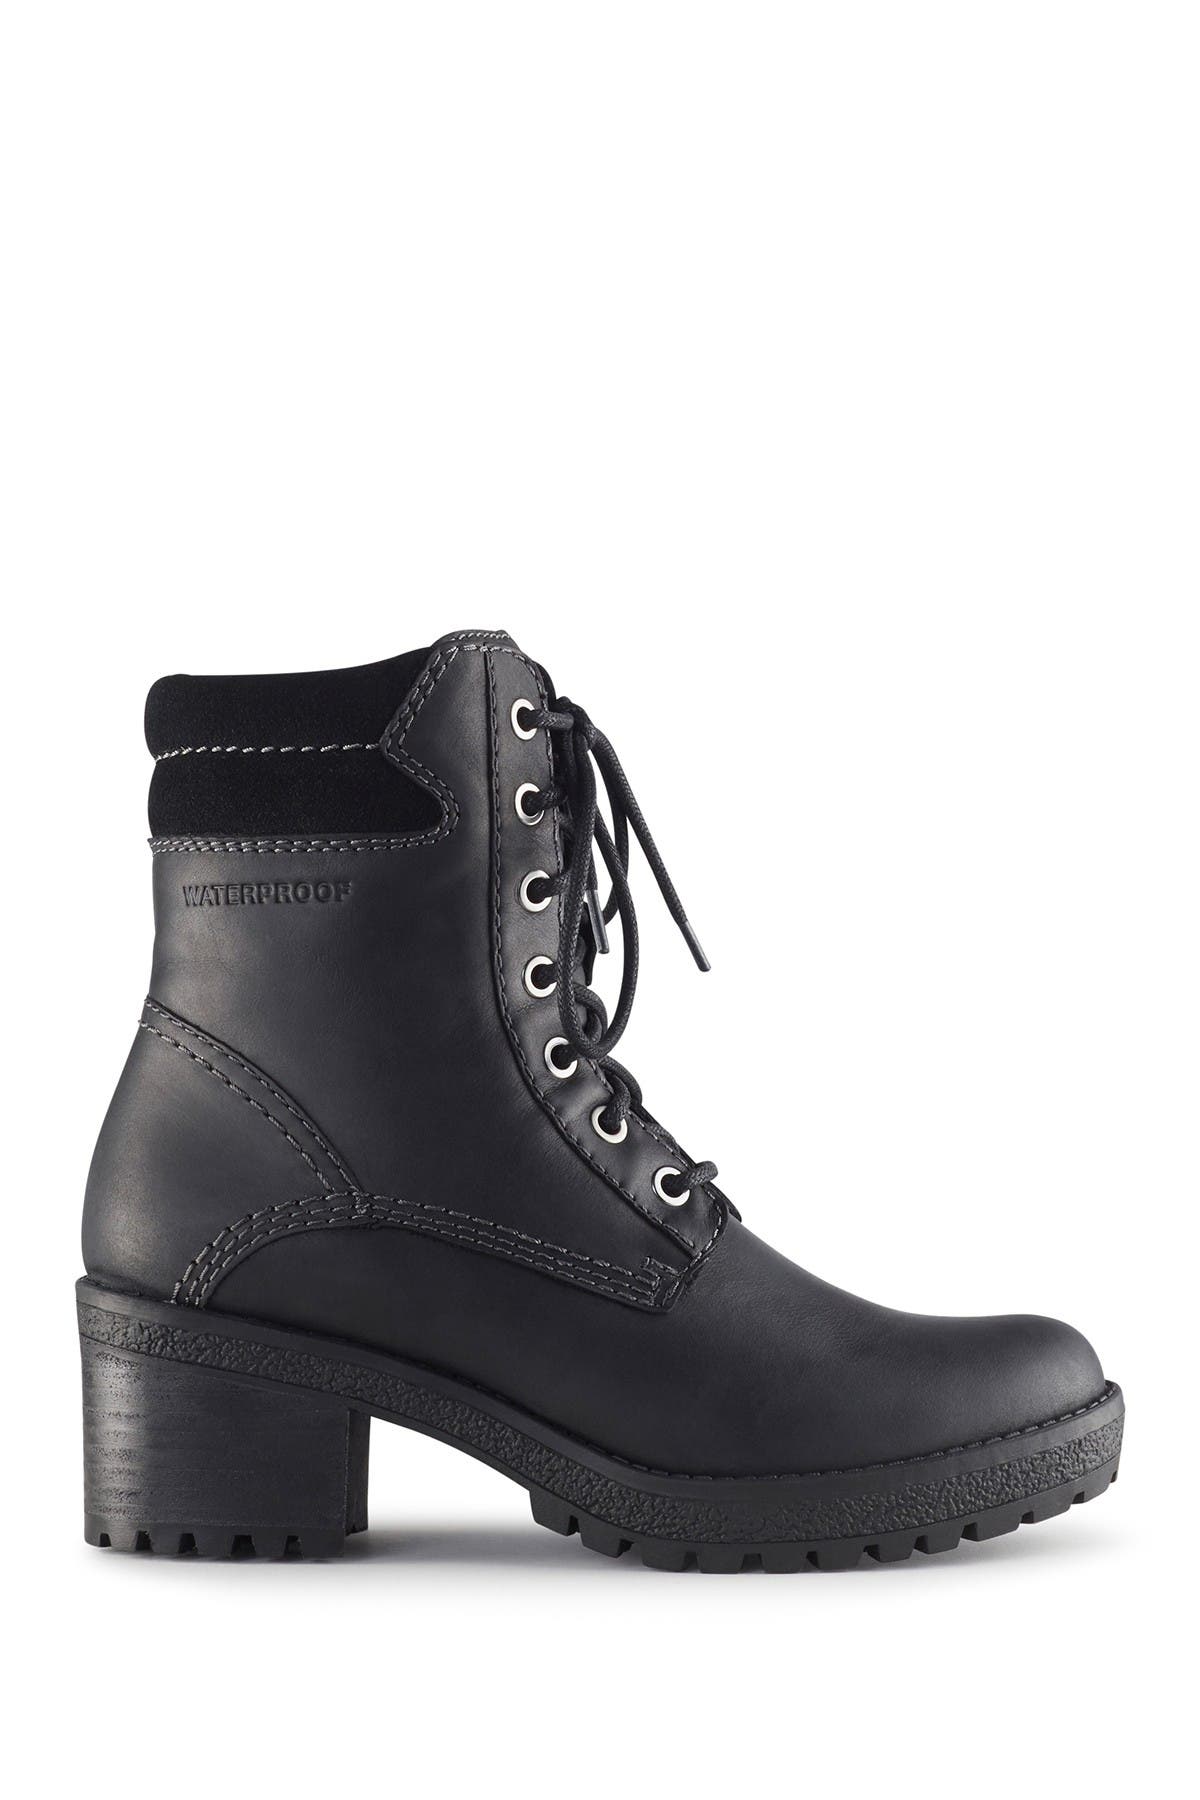 cougar danbury waterproof leather boots